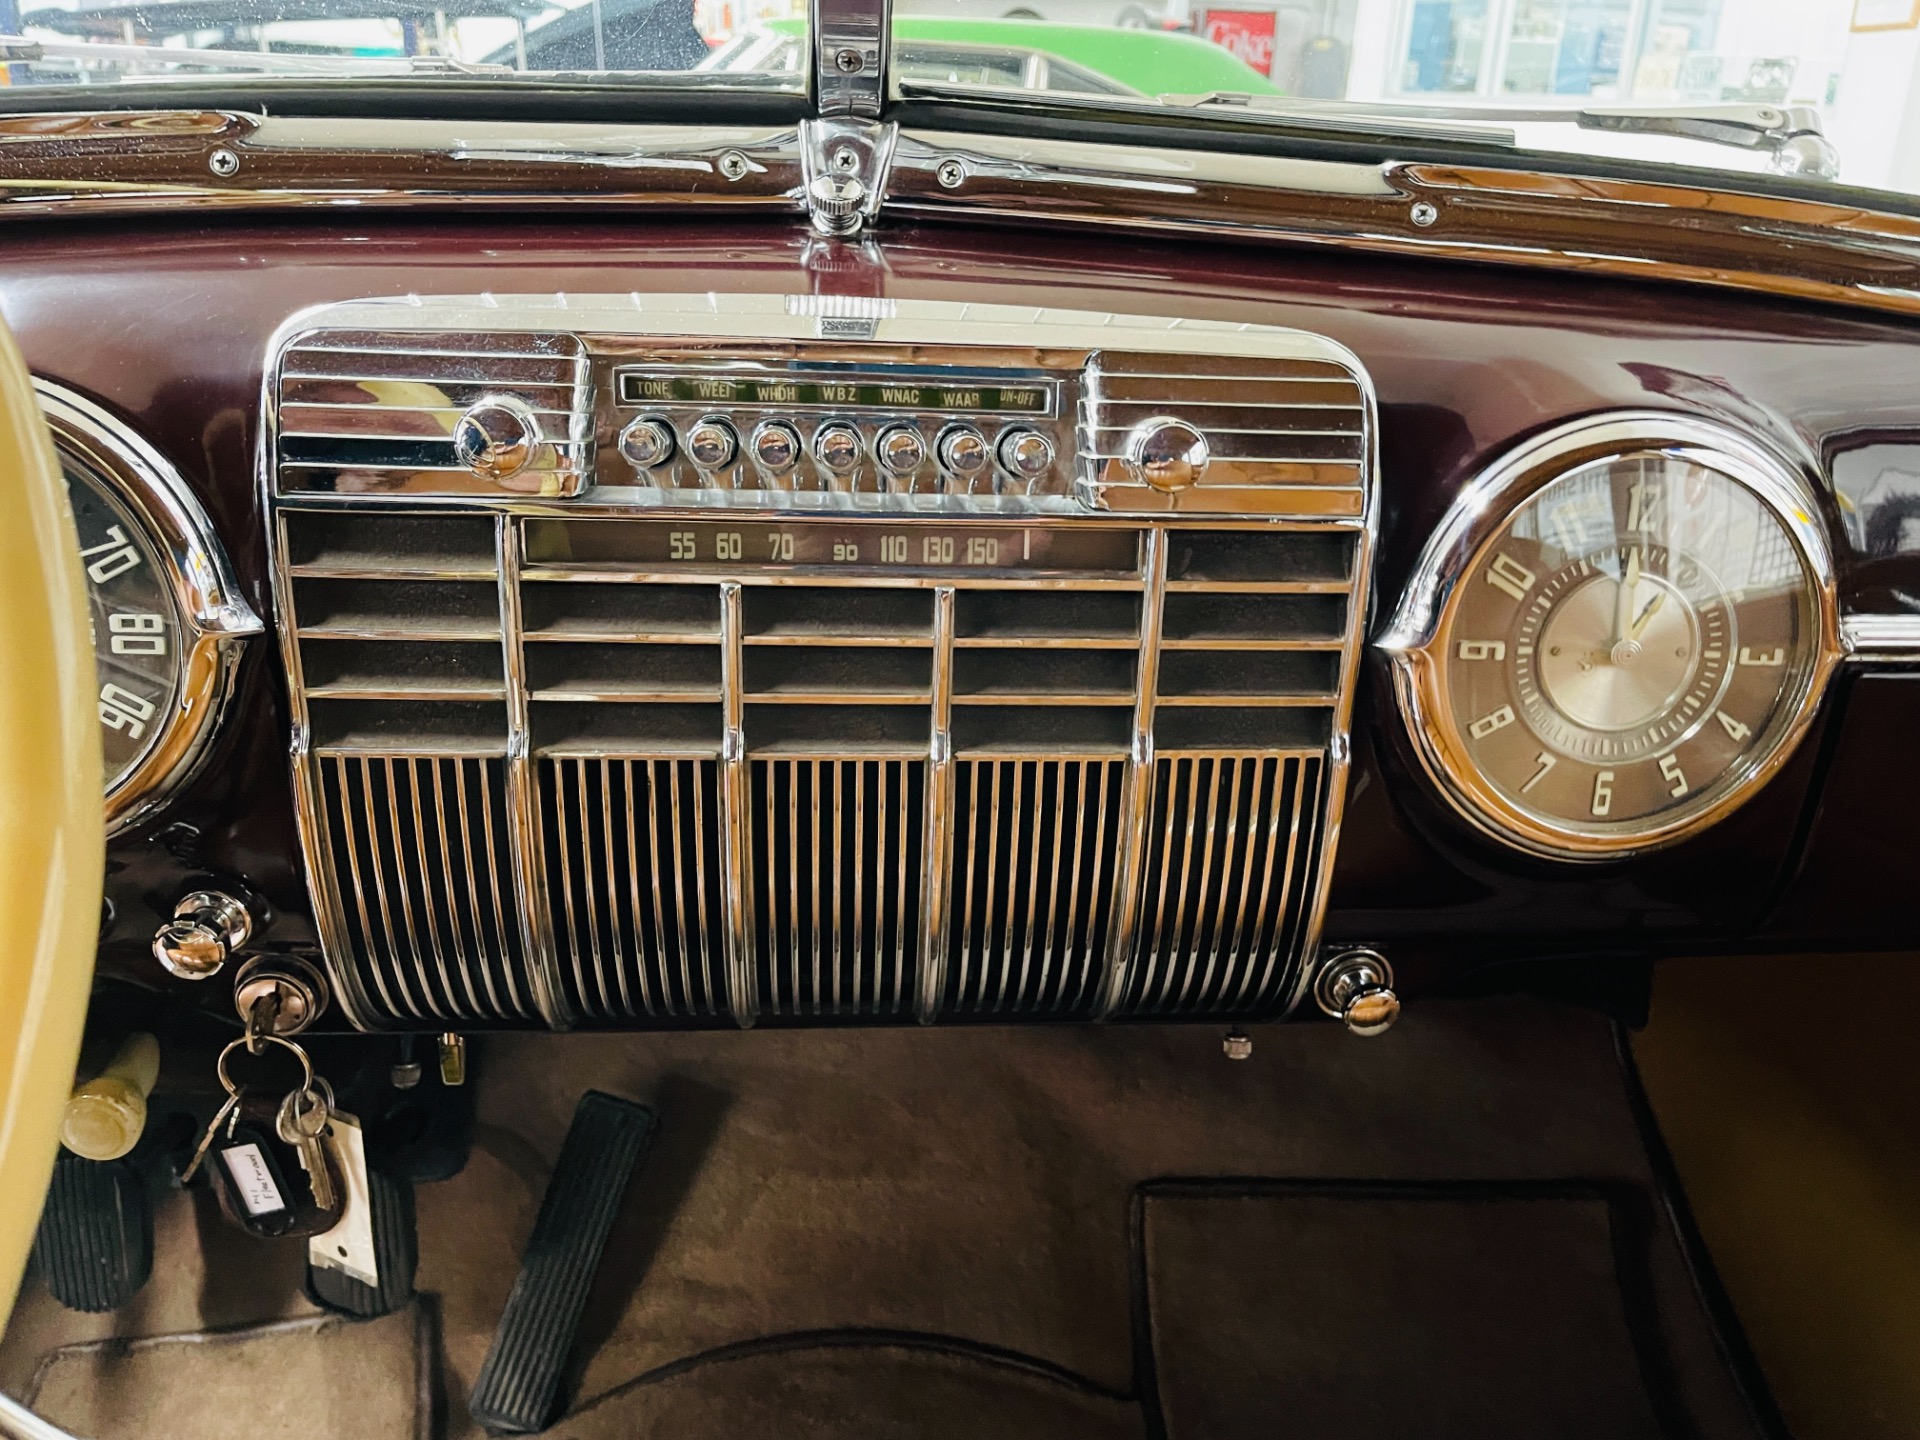 Used 1941 Cadillac Fleetwood - 4 DOOR SEDAN - HIGH QUALITY RESTORATION - SEE VIDEO | Mundelein, IL